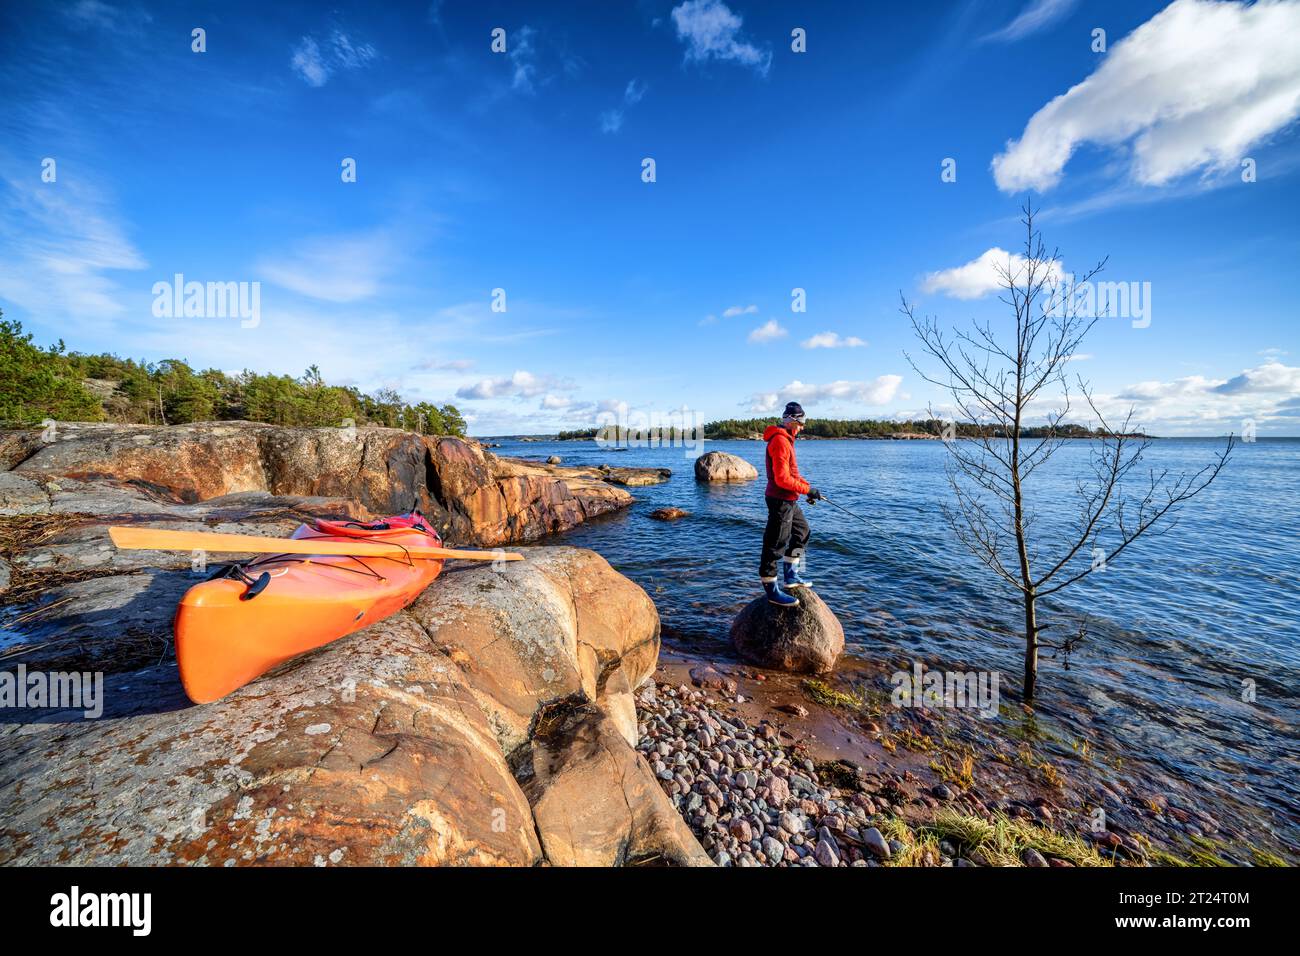 Kayaking and fishing at Stora Halsö island, Inkoo, Finland Stock Photo